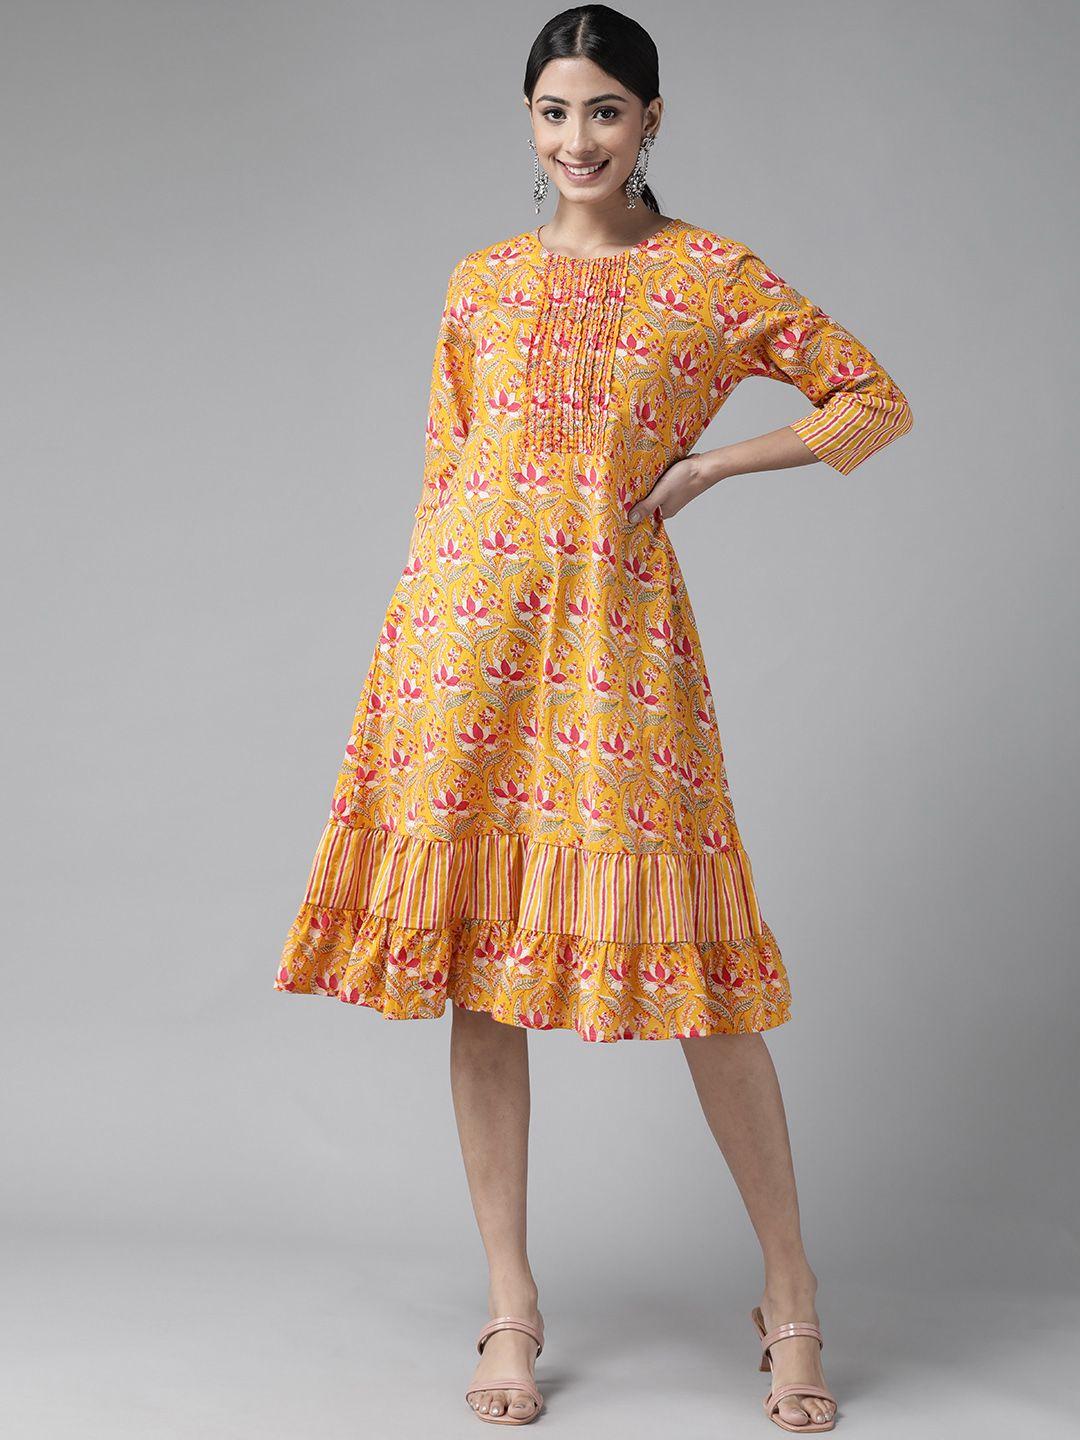 amirah s mustard yellow & pink ethnic motifs sequin detail ethnic dress